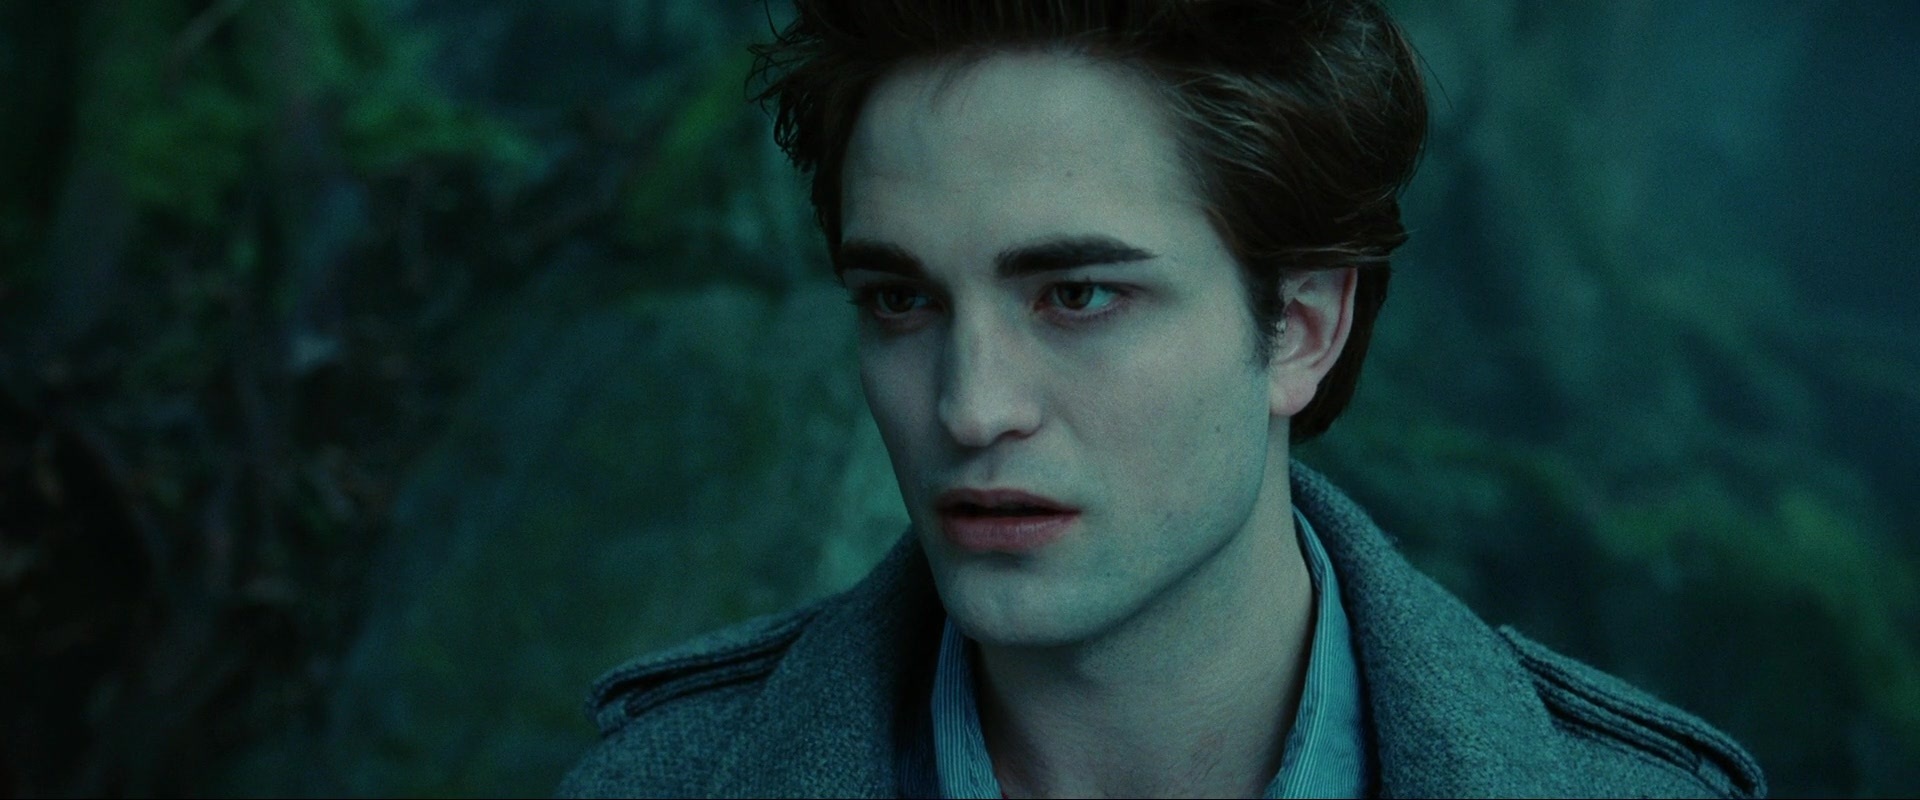 Robert Pattinson Image Twilight Full HD Wallpaper And